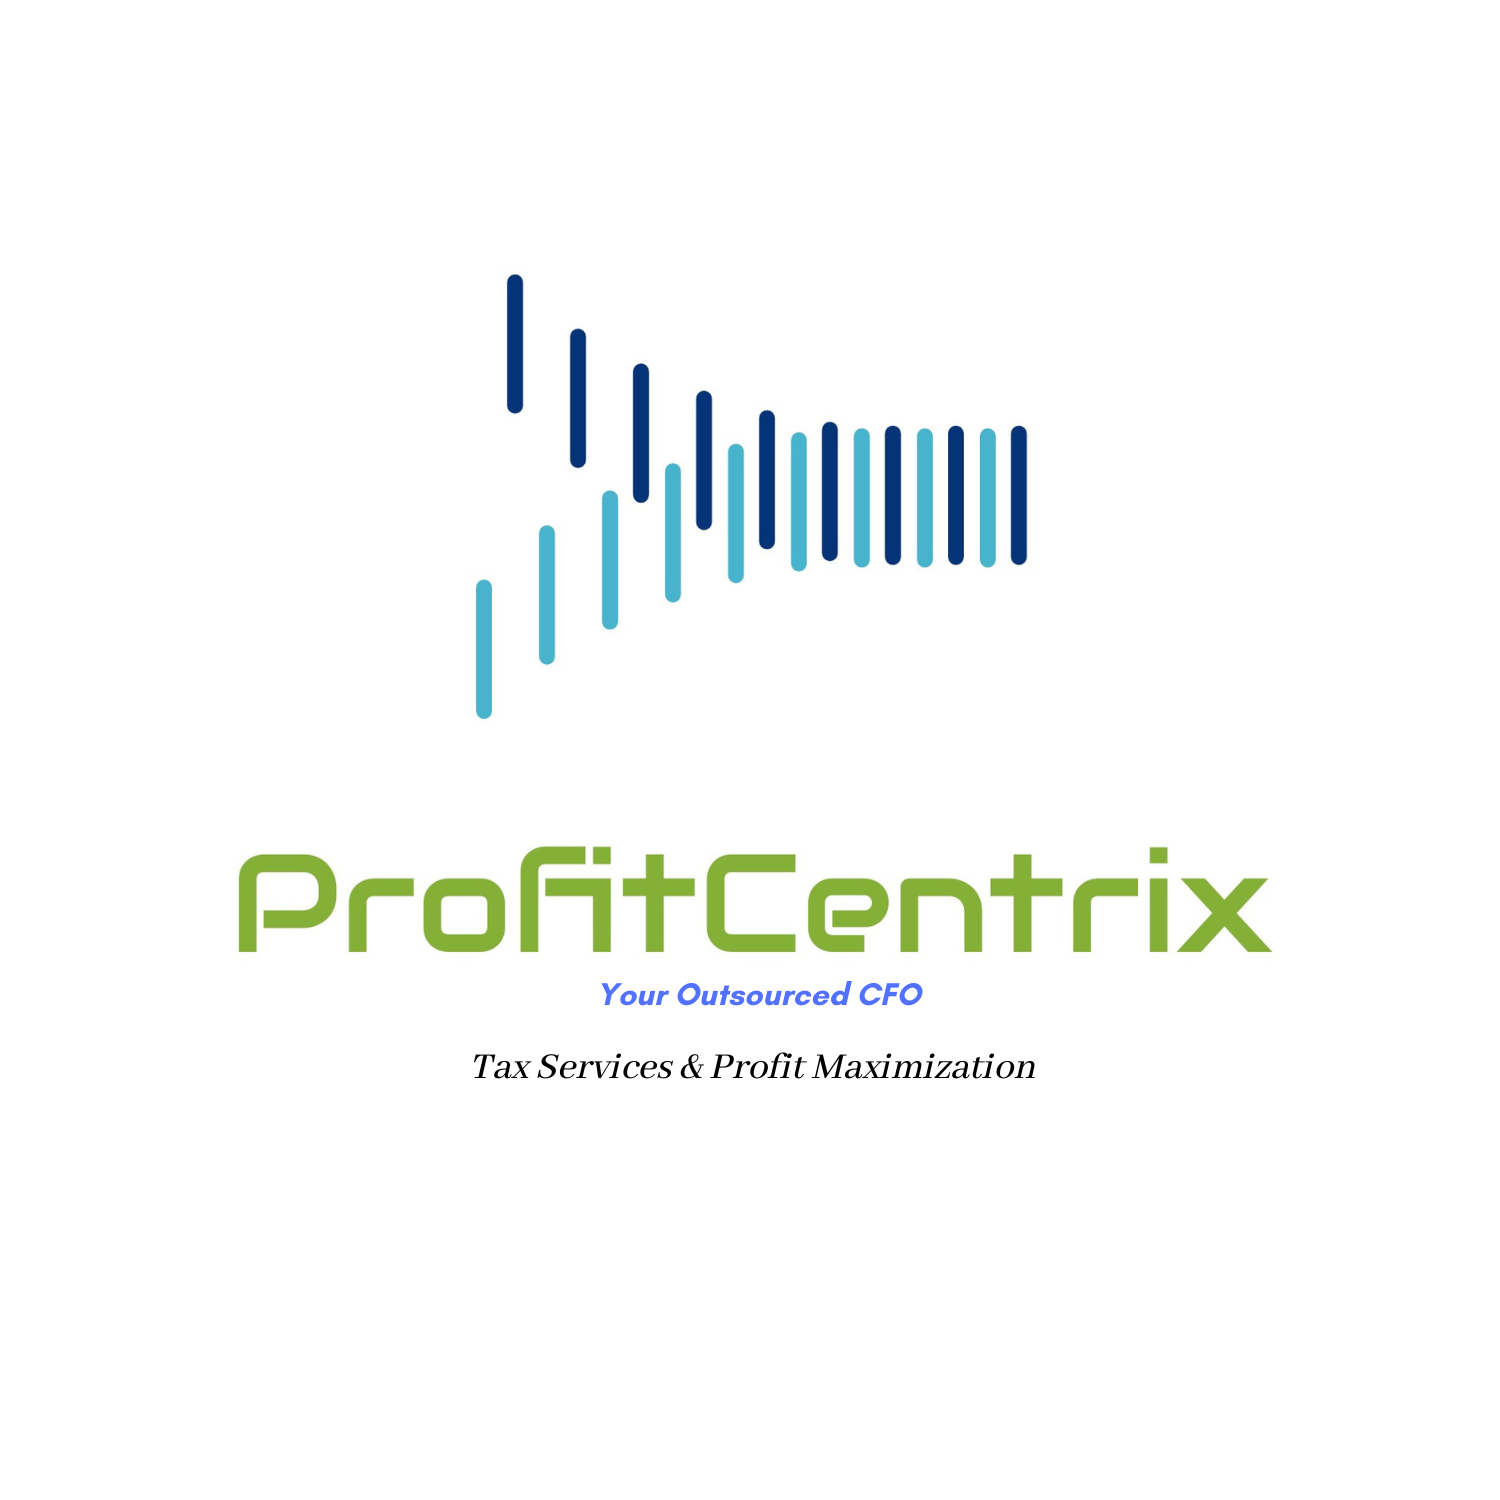 Profitcentrix